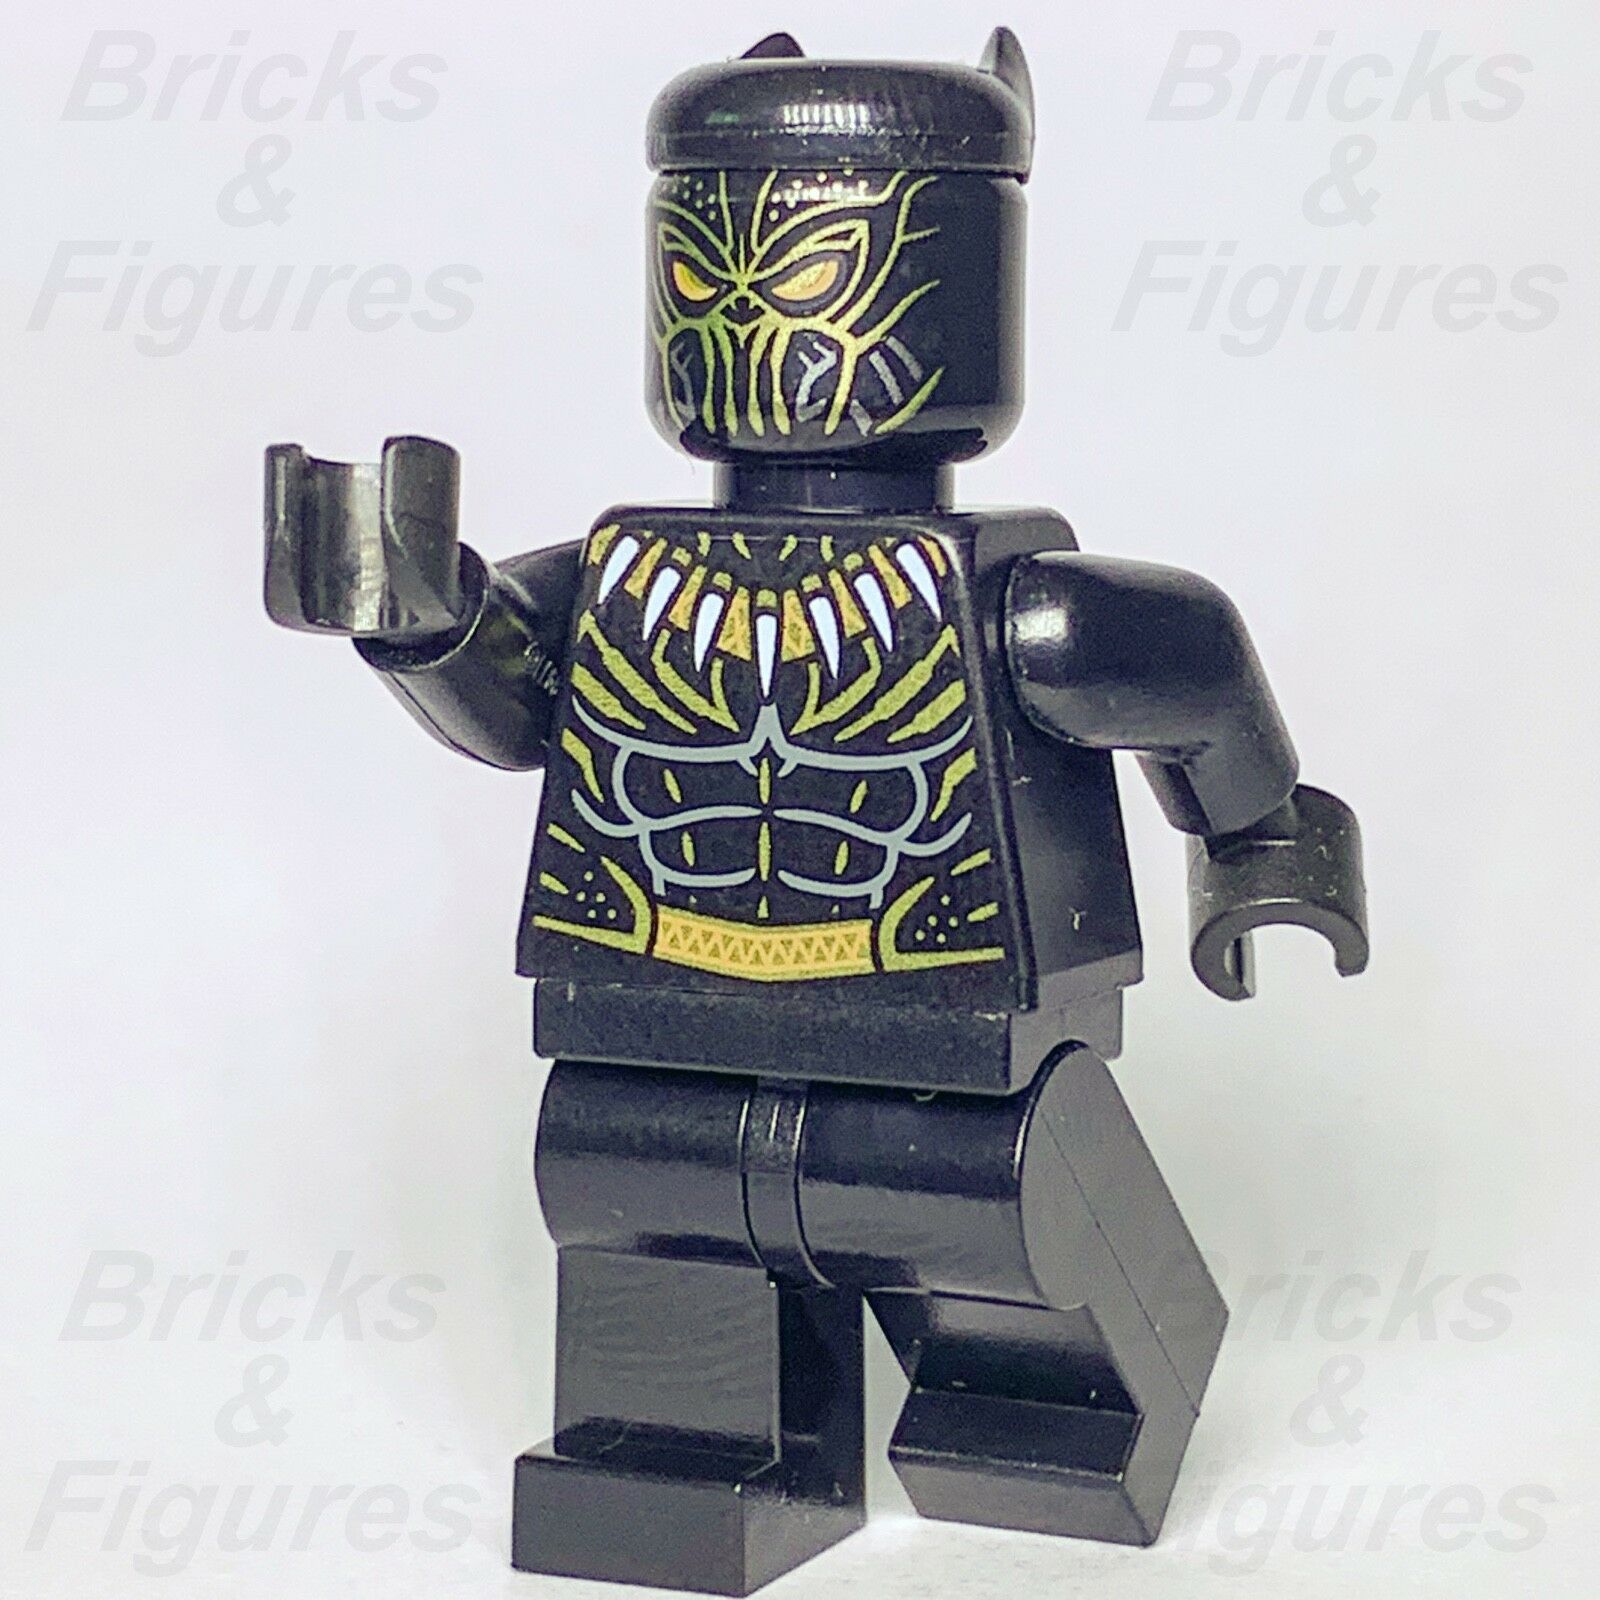 New Marvel Super Heroes LEGO Erik Killmonger Black Panther Minifigure 76099 - Bricks & Figures